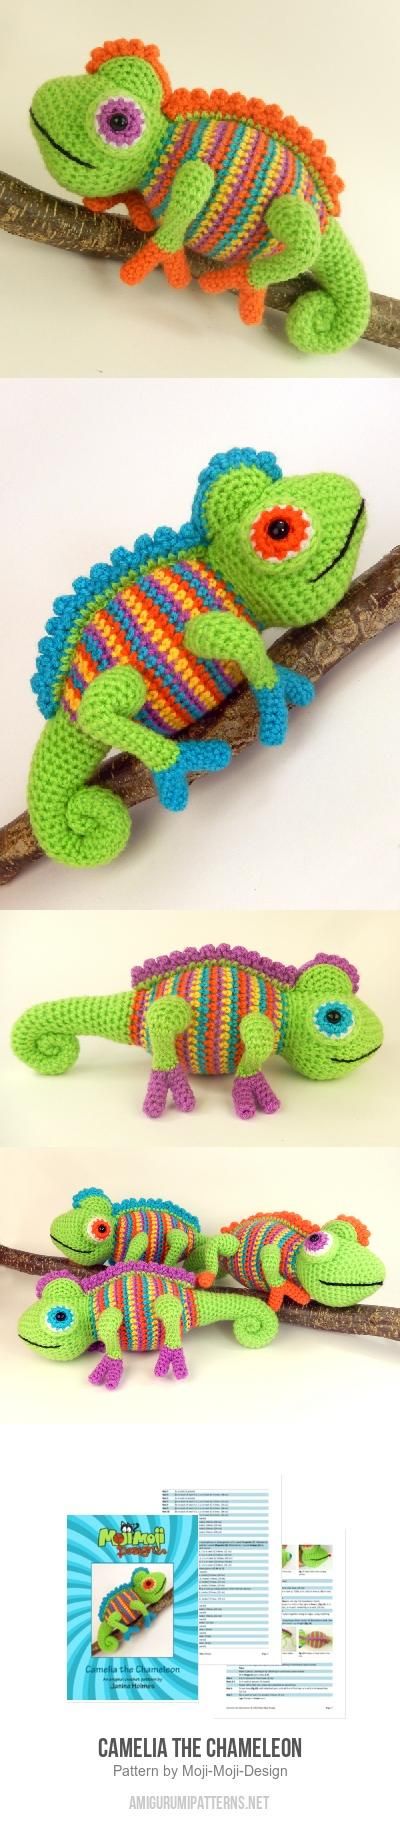 crochet chameleon amigurumi